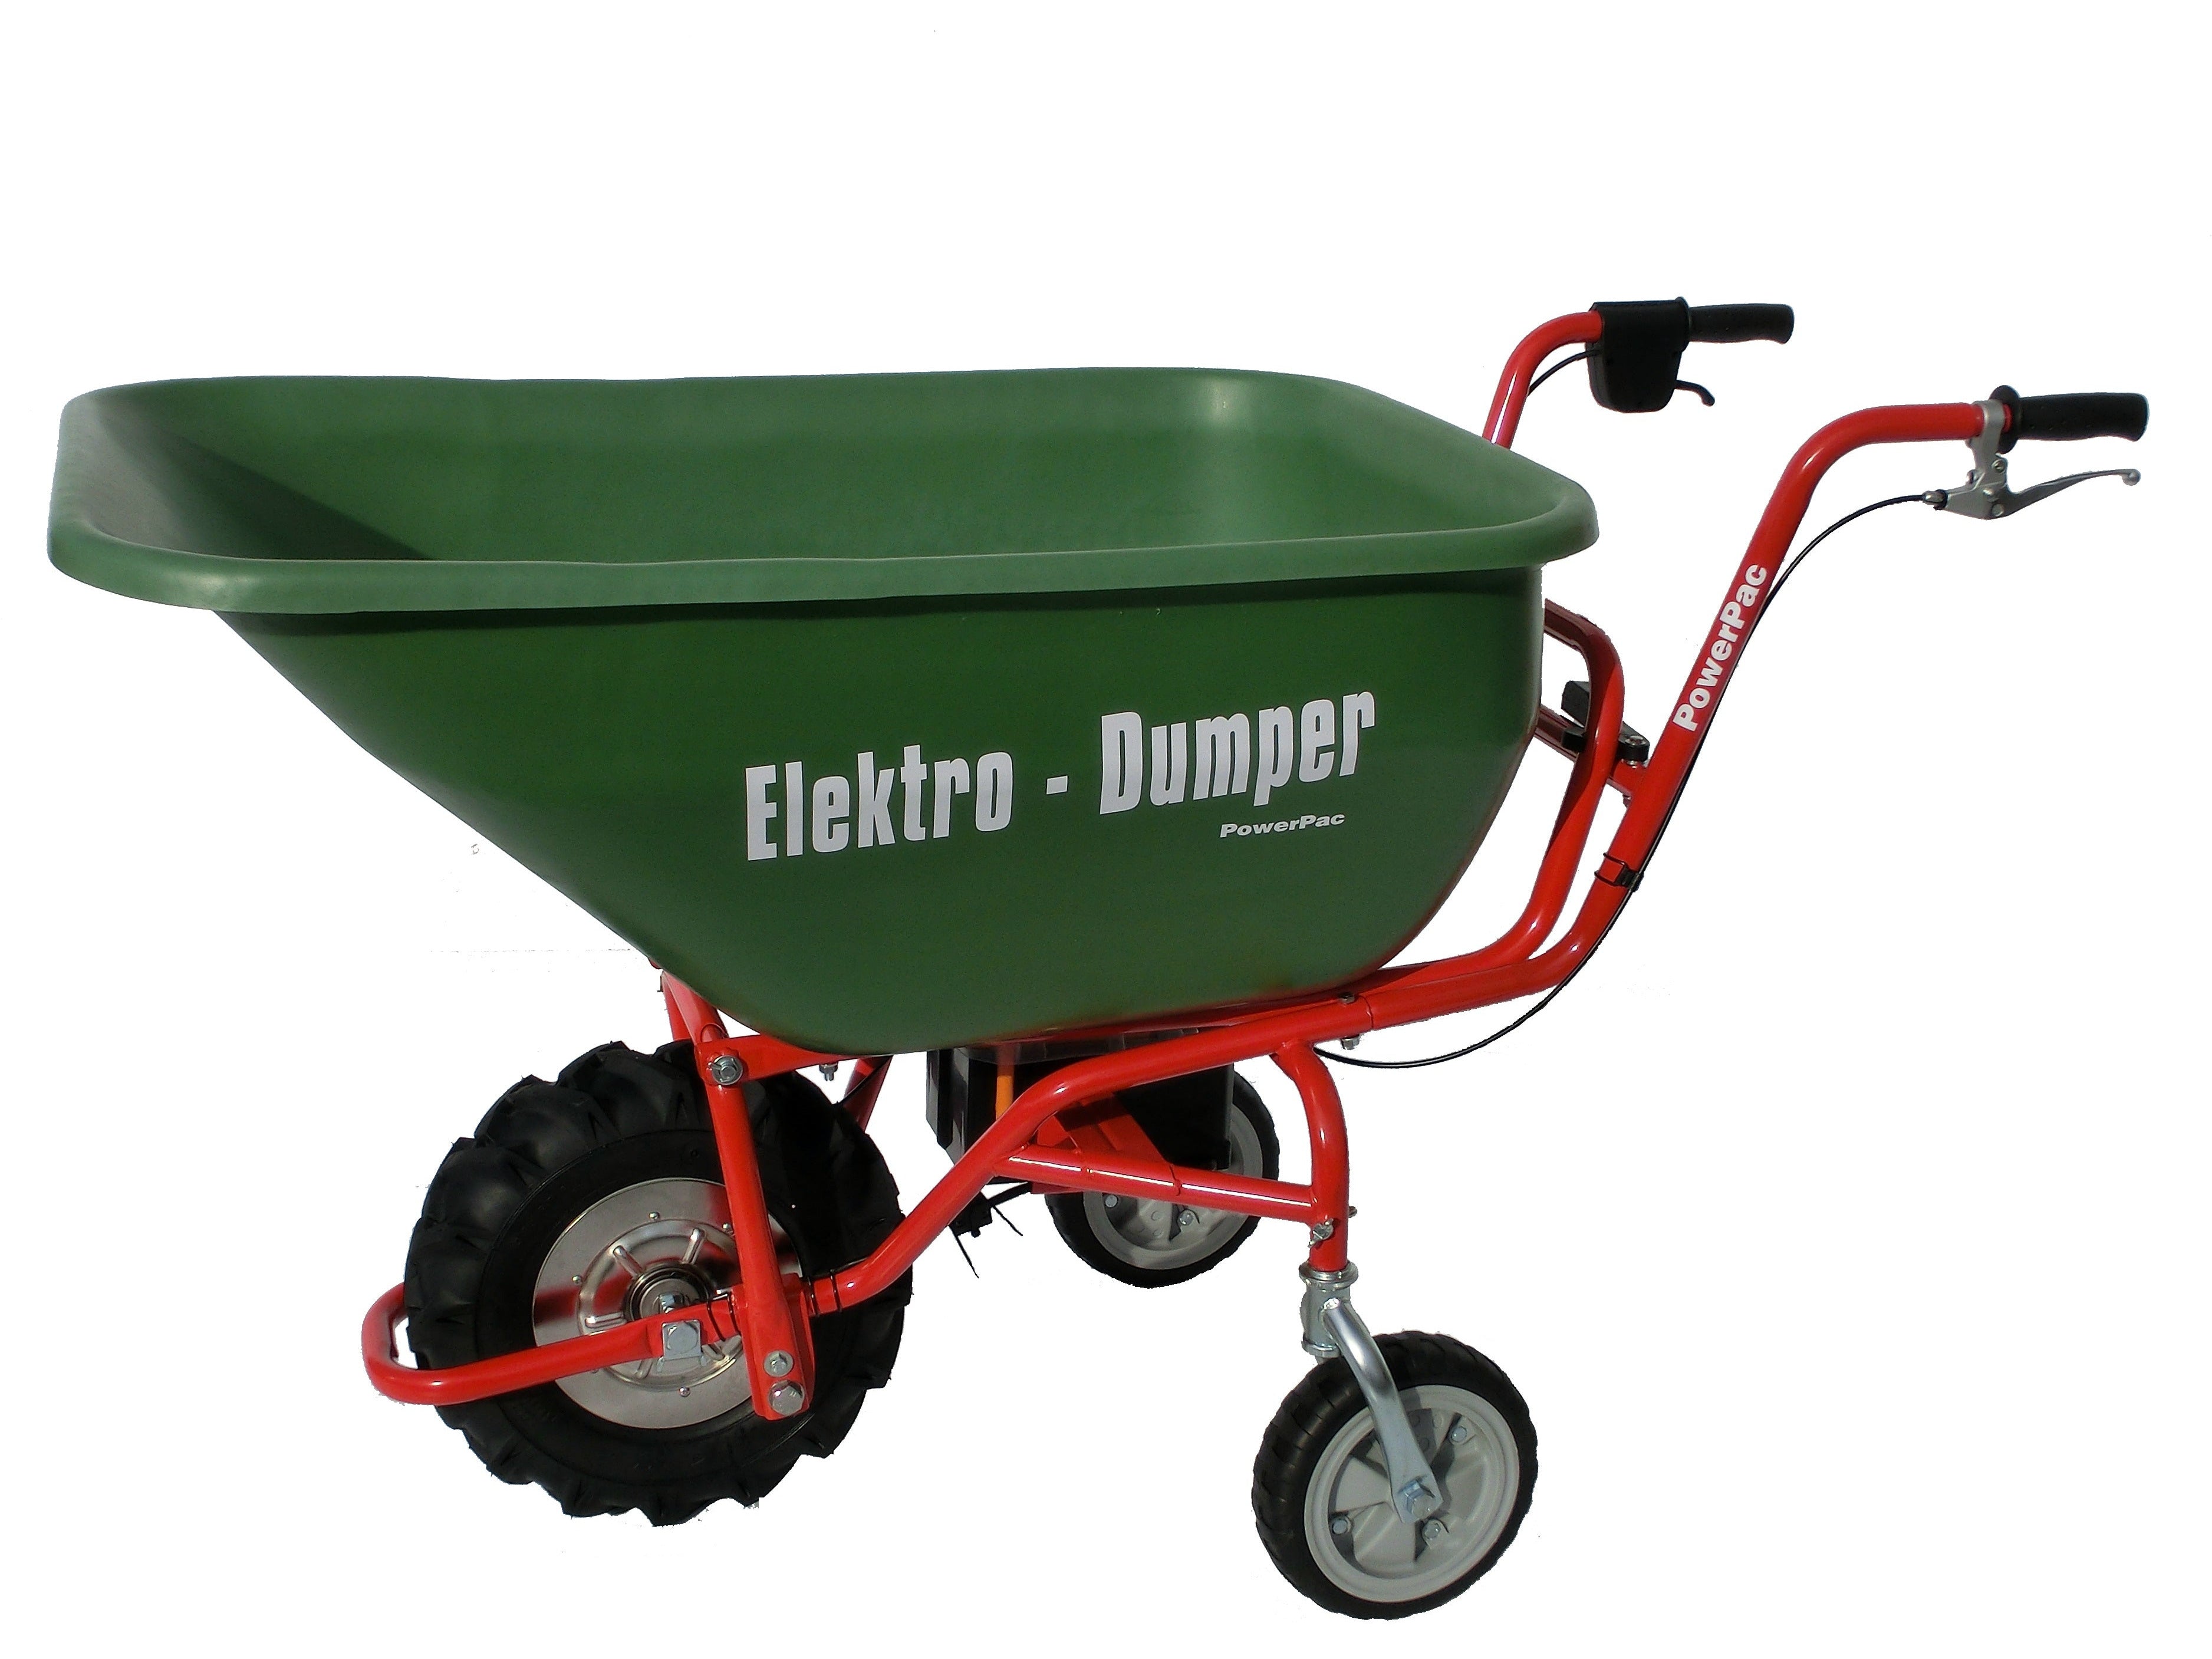 PowerPac electric wheelbarrow battery / electric dumper